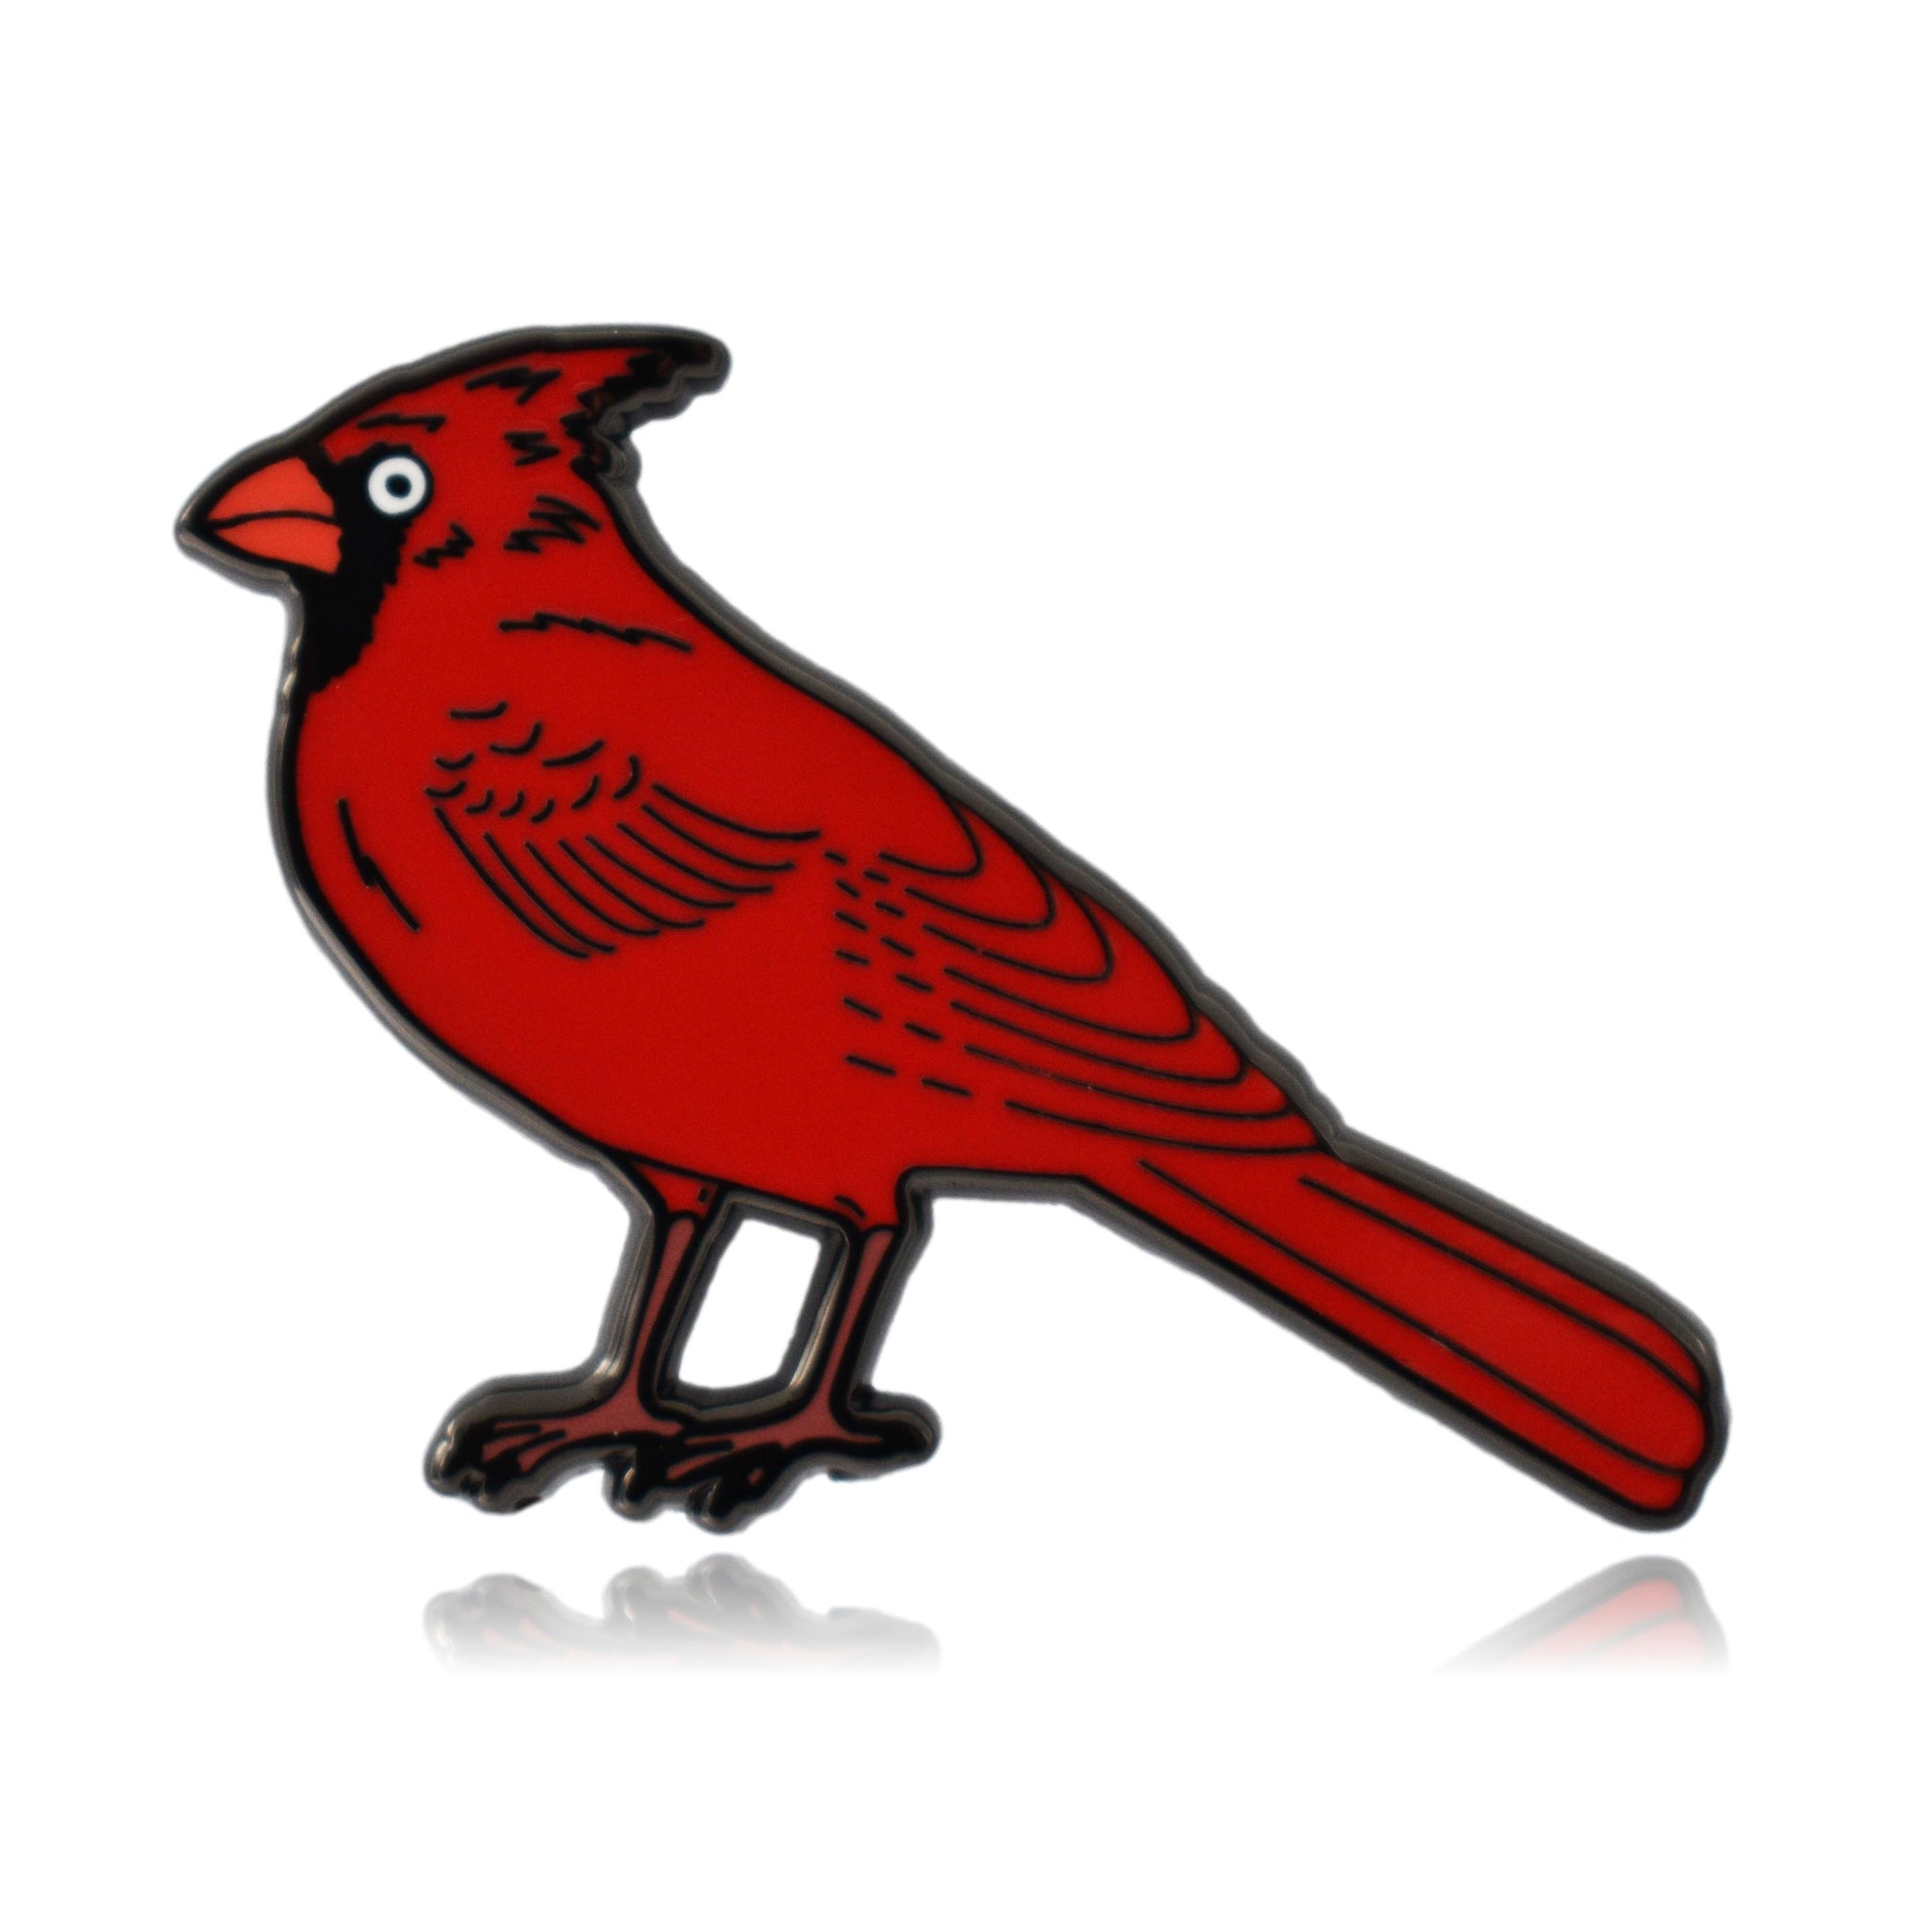 Red Cardinal Bird Hard Enamel Pin | Clayton Jewelry Labs